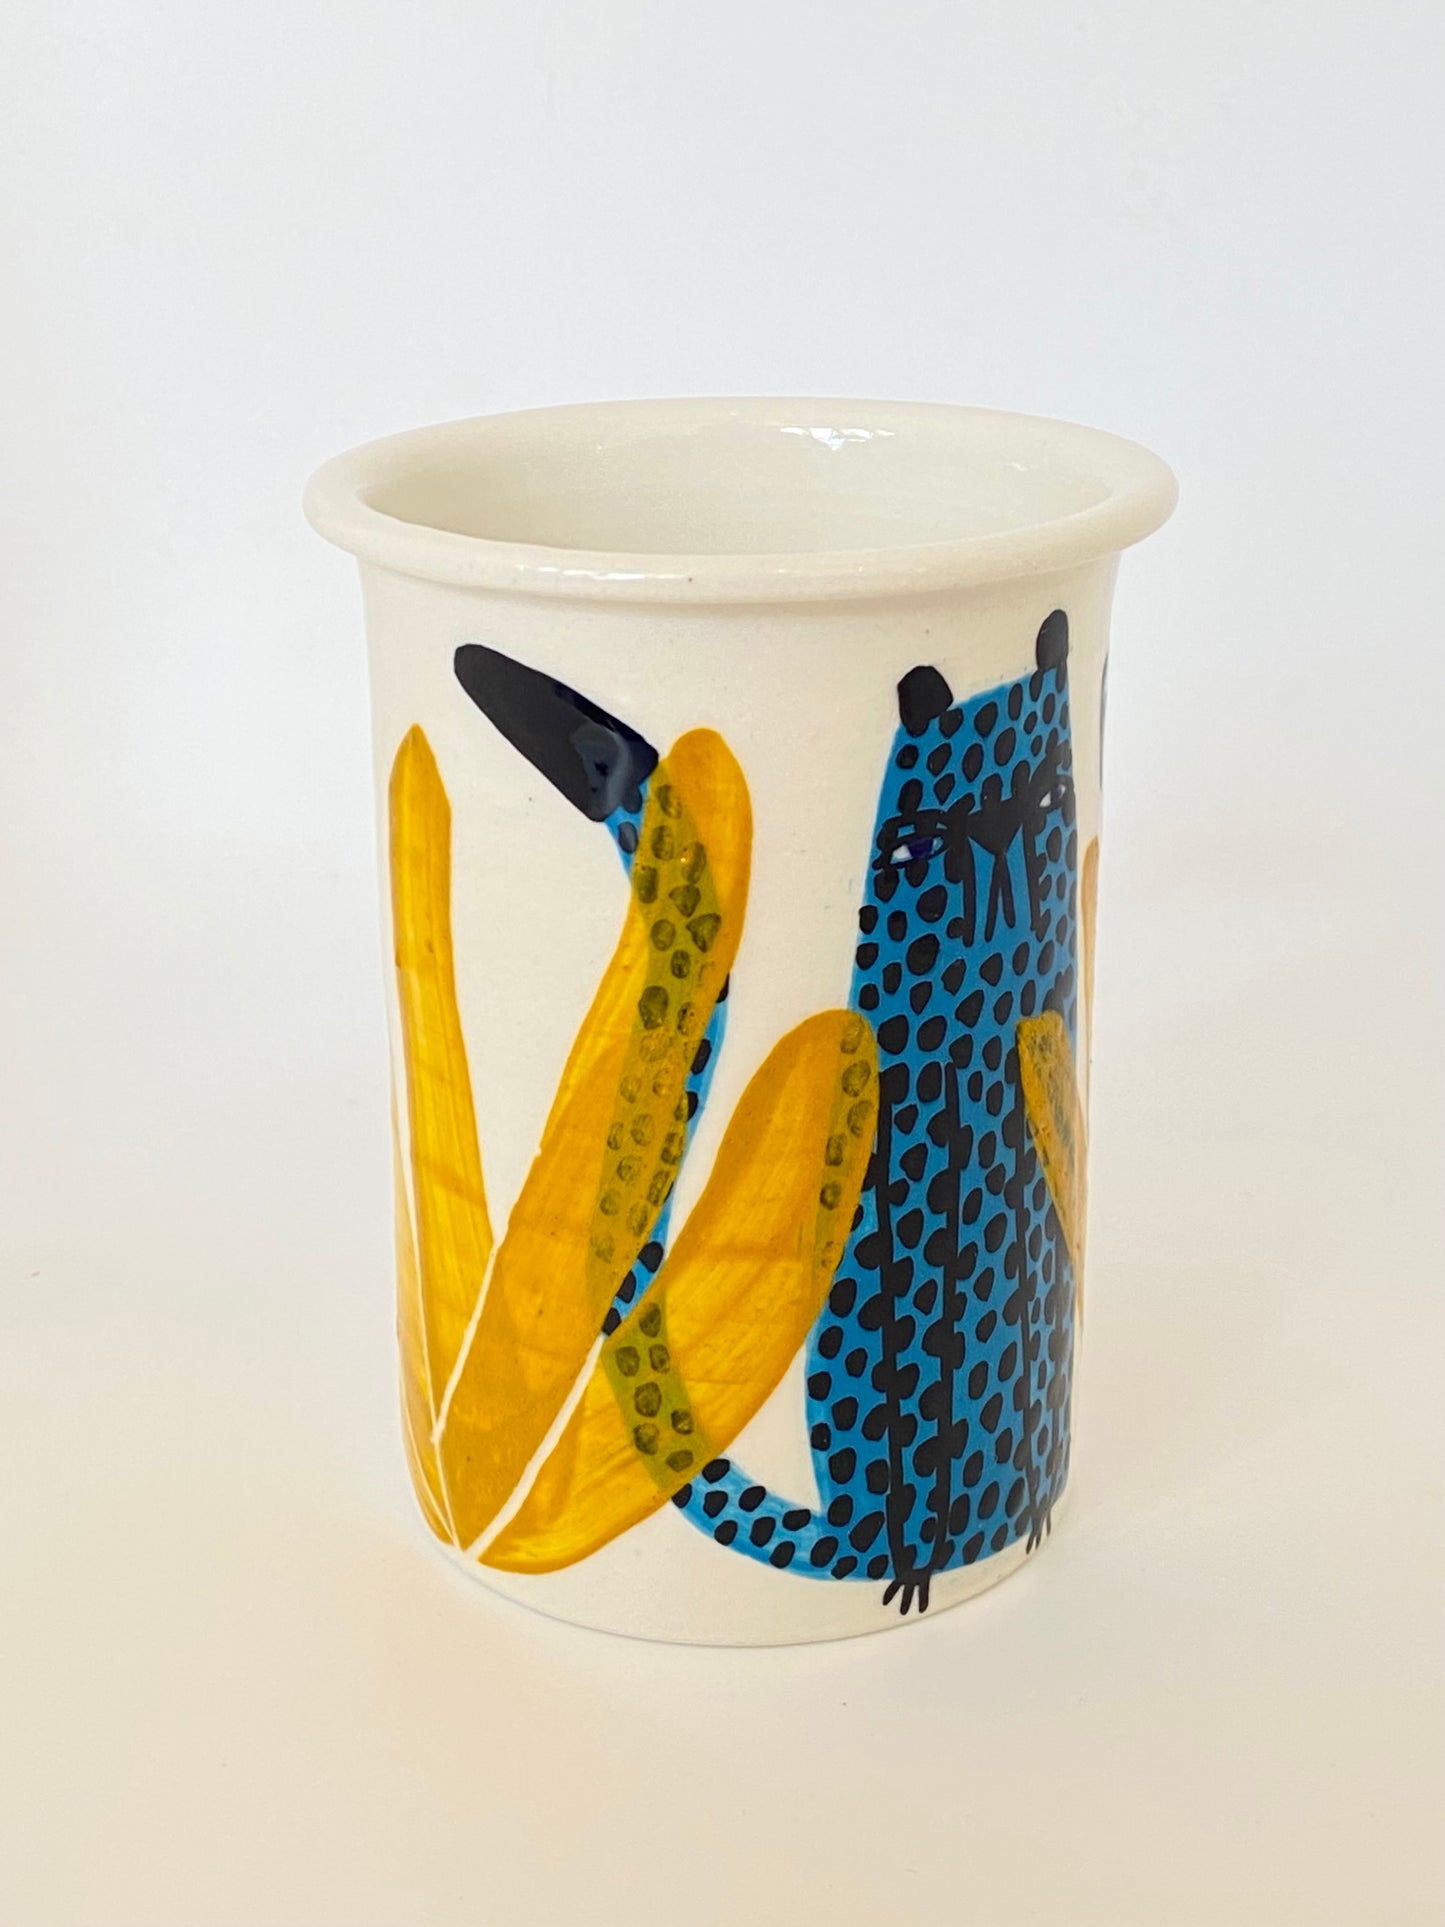 Ceramic Cups by Studio Soph - "FUCK OFF" Blue Cheetah